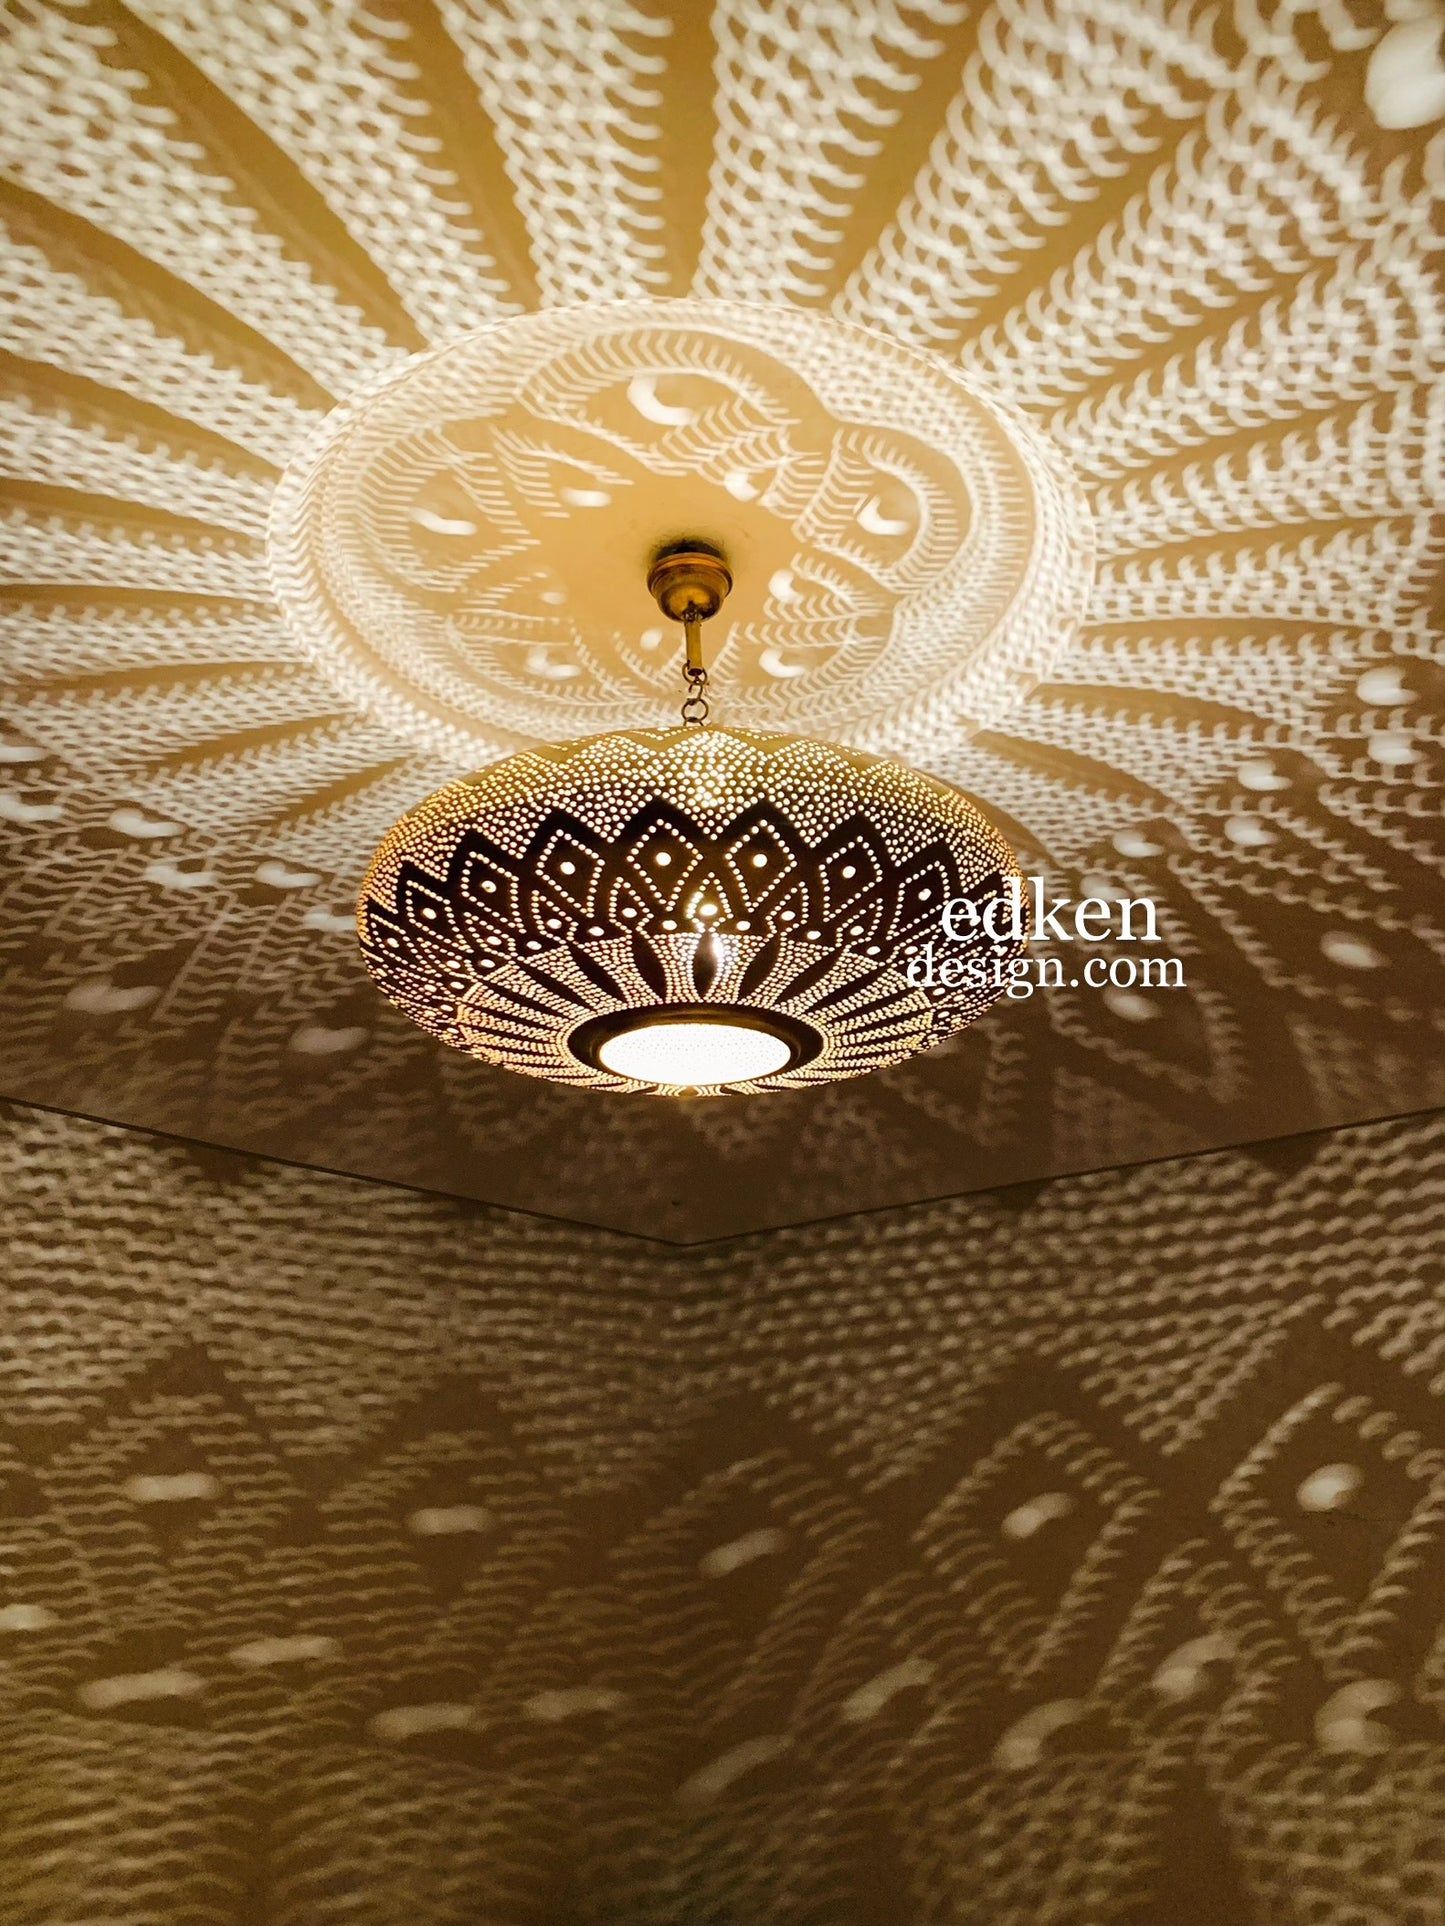 EDKEN LIGHTS - Close view Morocco Ceiling Lamp Shades Fixture pierced Brass Lozenge Hanging Lights Handmade Brass Morocco Home Decor Lighting